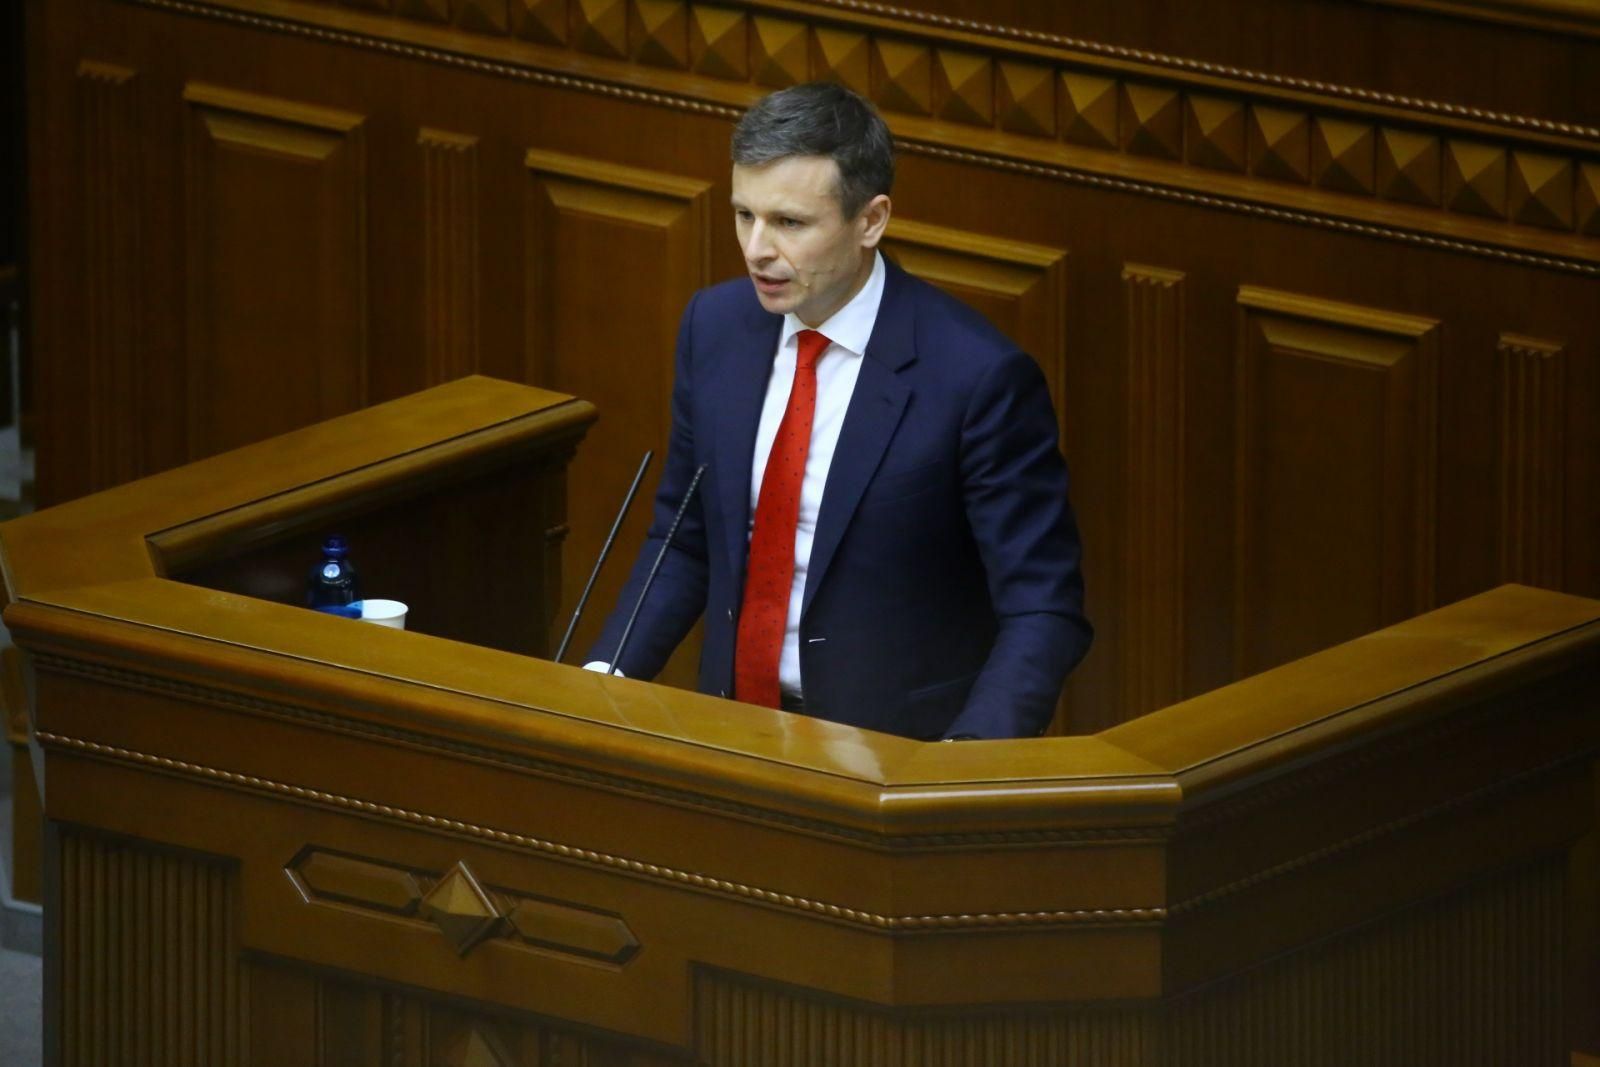 Кроме кредитования, государство не предоставит поддержки бизнесу, – министр Марченко о бюджете - Украина новости - Бизнес